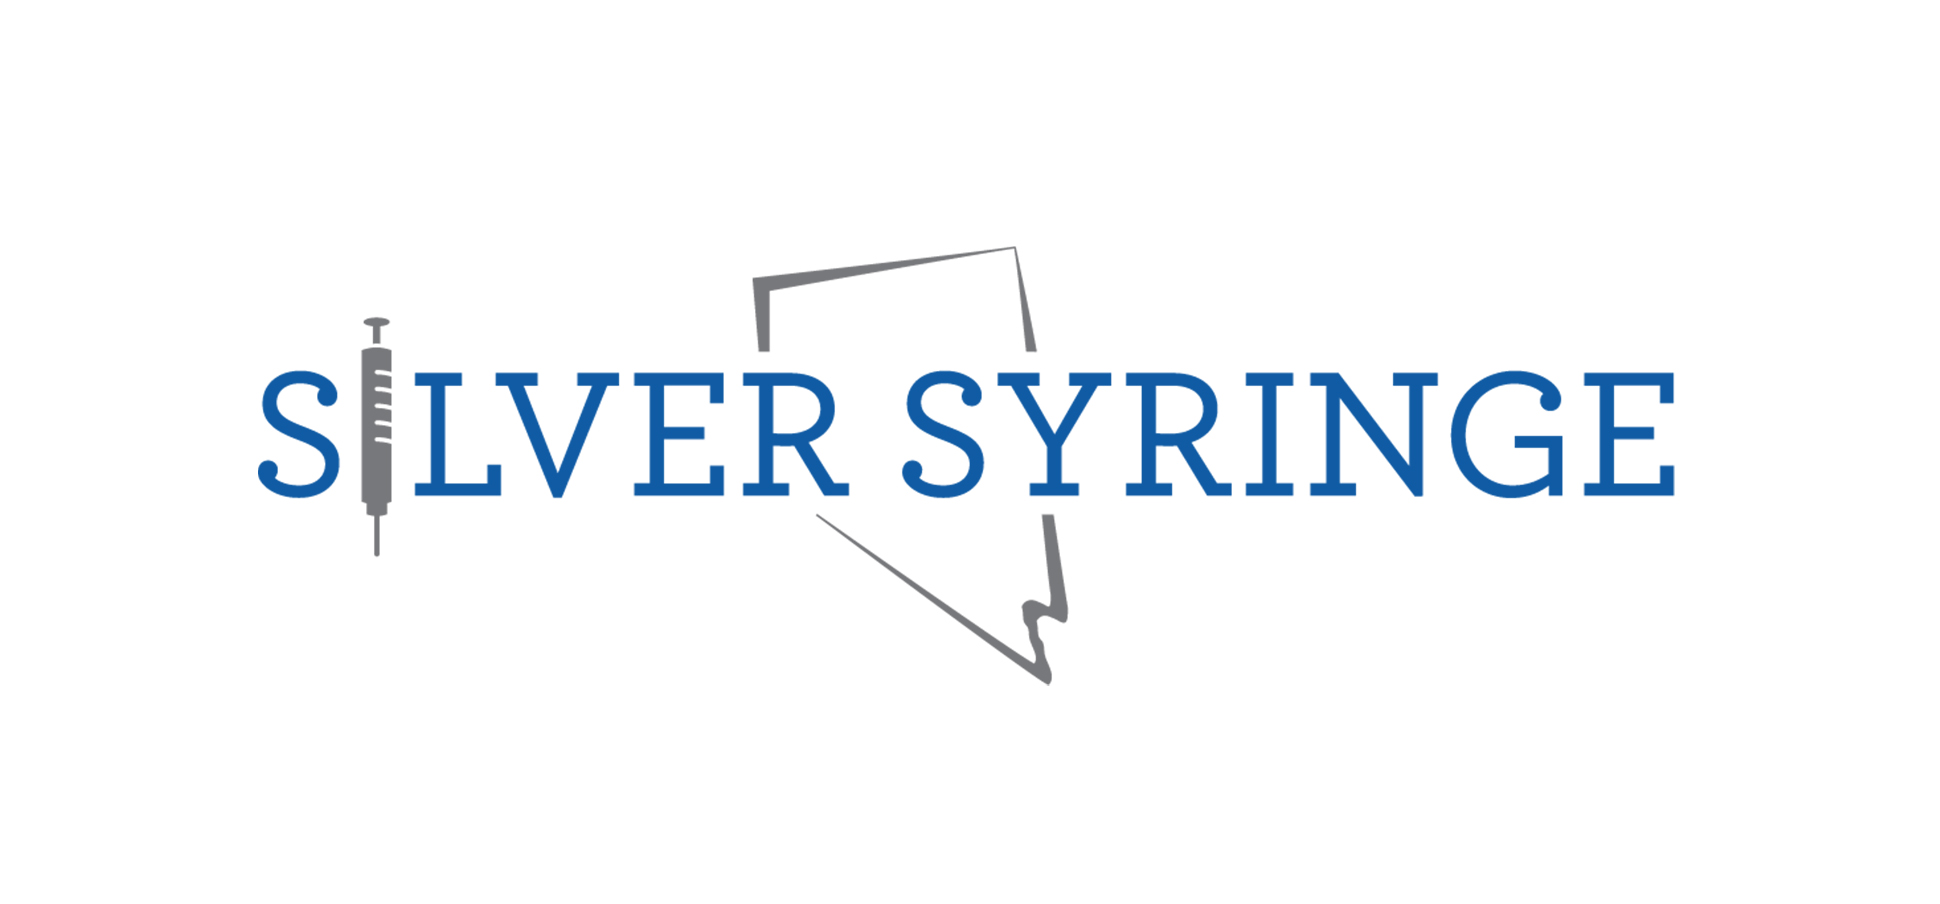 silver syringe logo